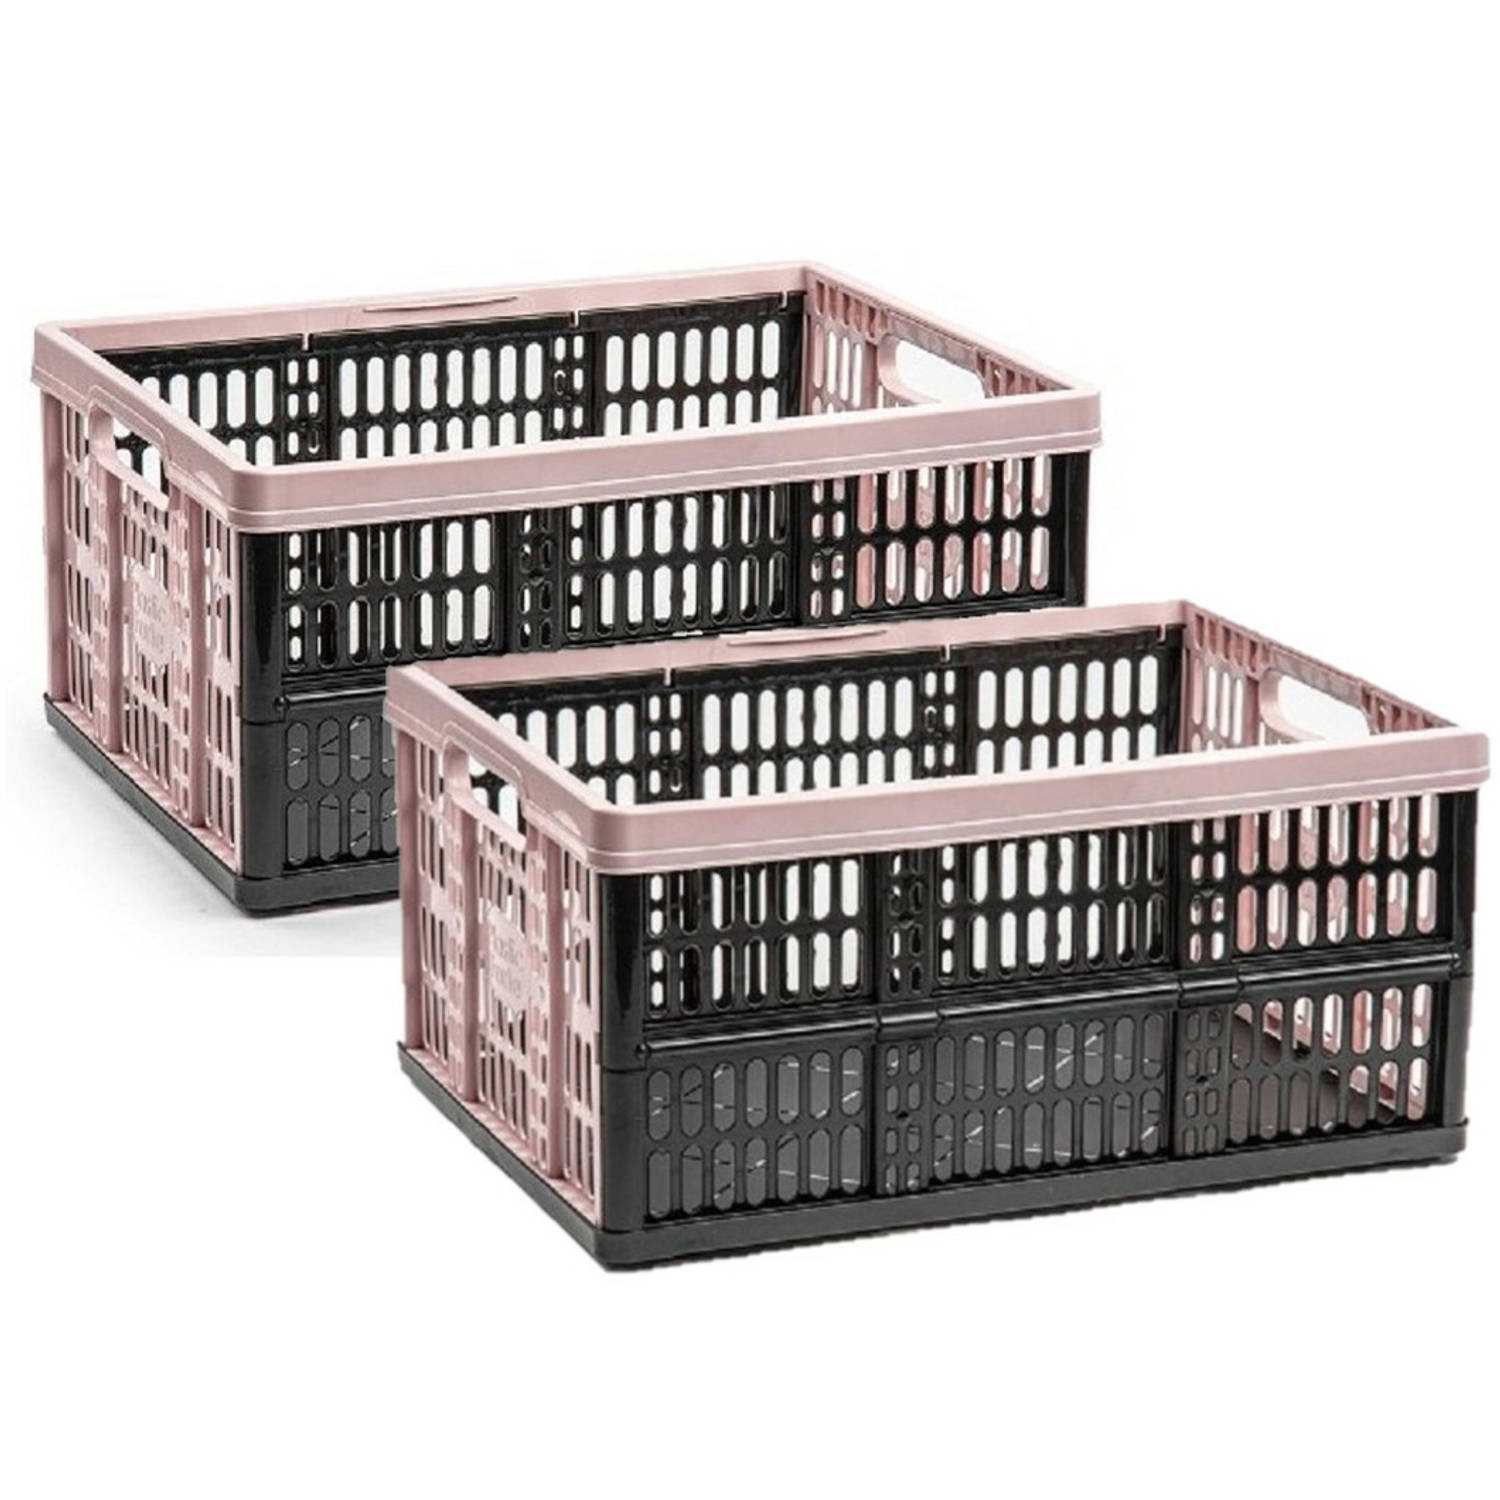 Forte Plastics 2x stuks boodschappen kratten opvouwbaar zwart/roze 48 35 x 24 cm - Boodschappenkratten | Blokker